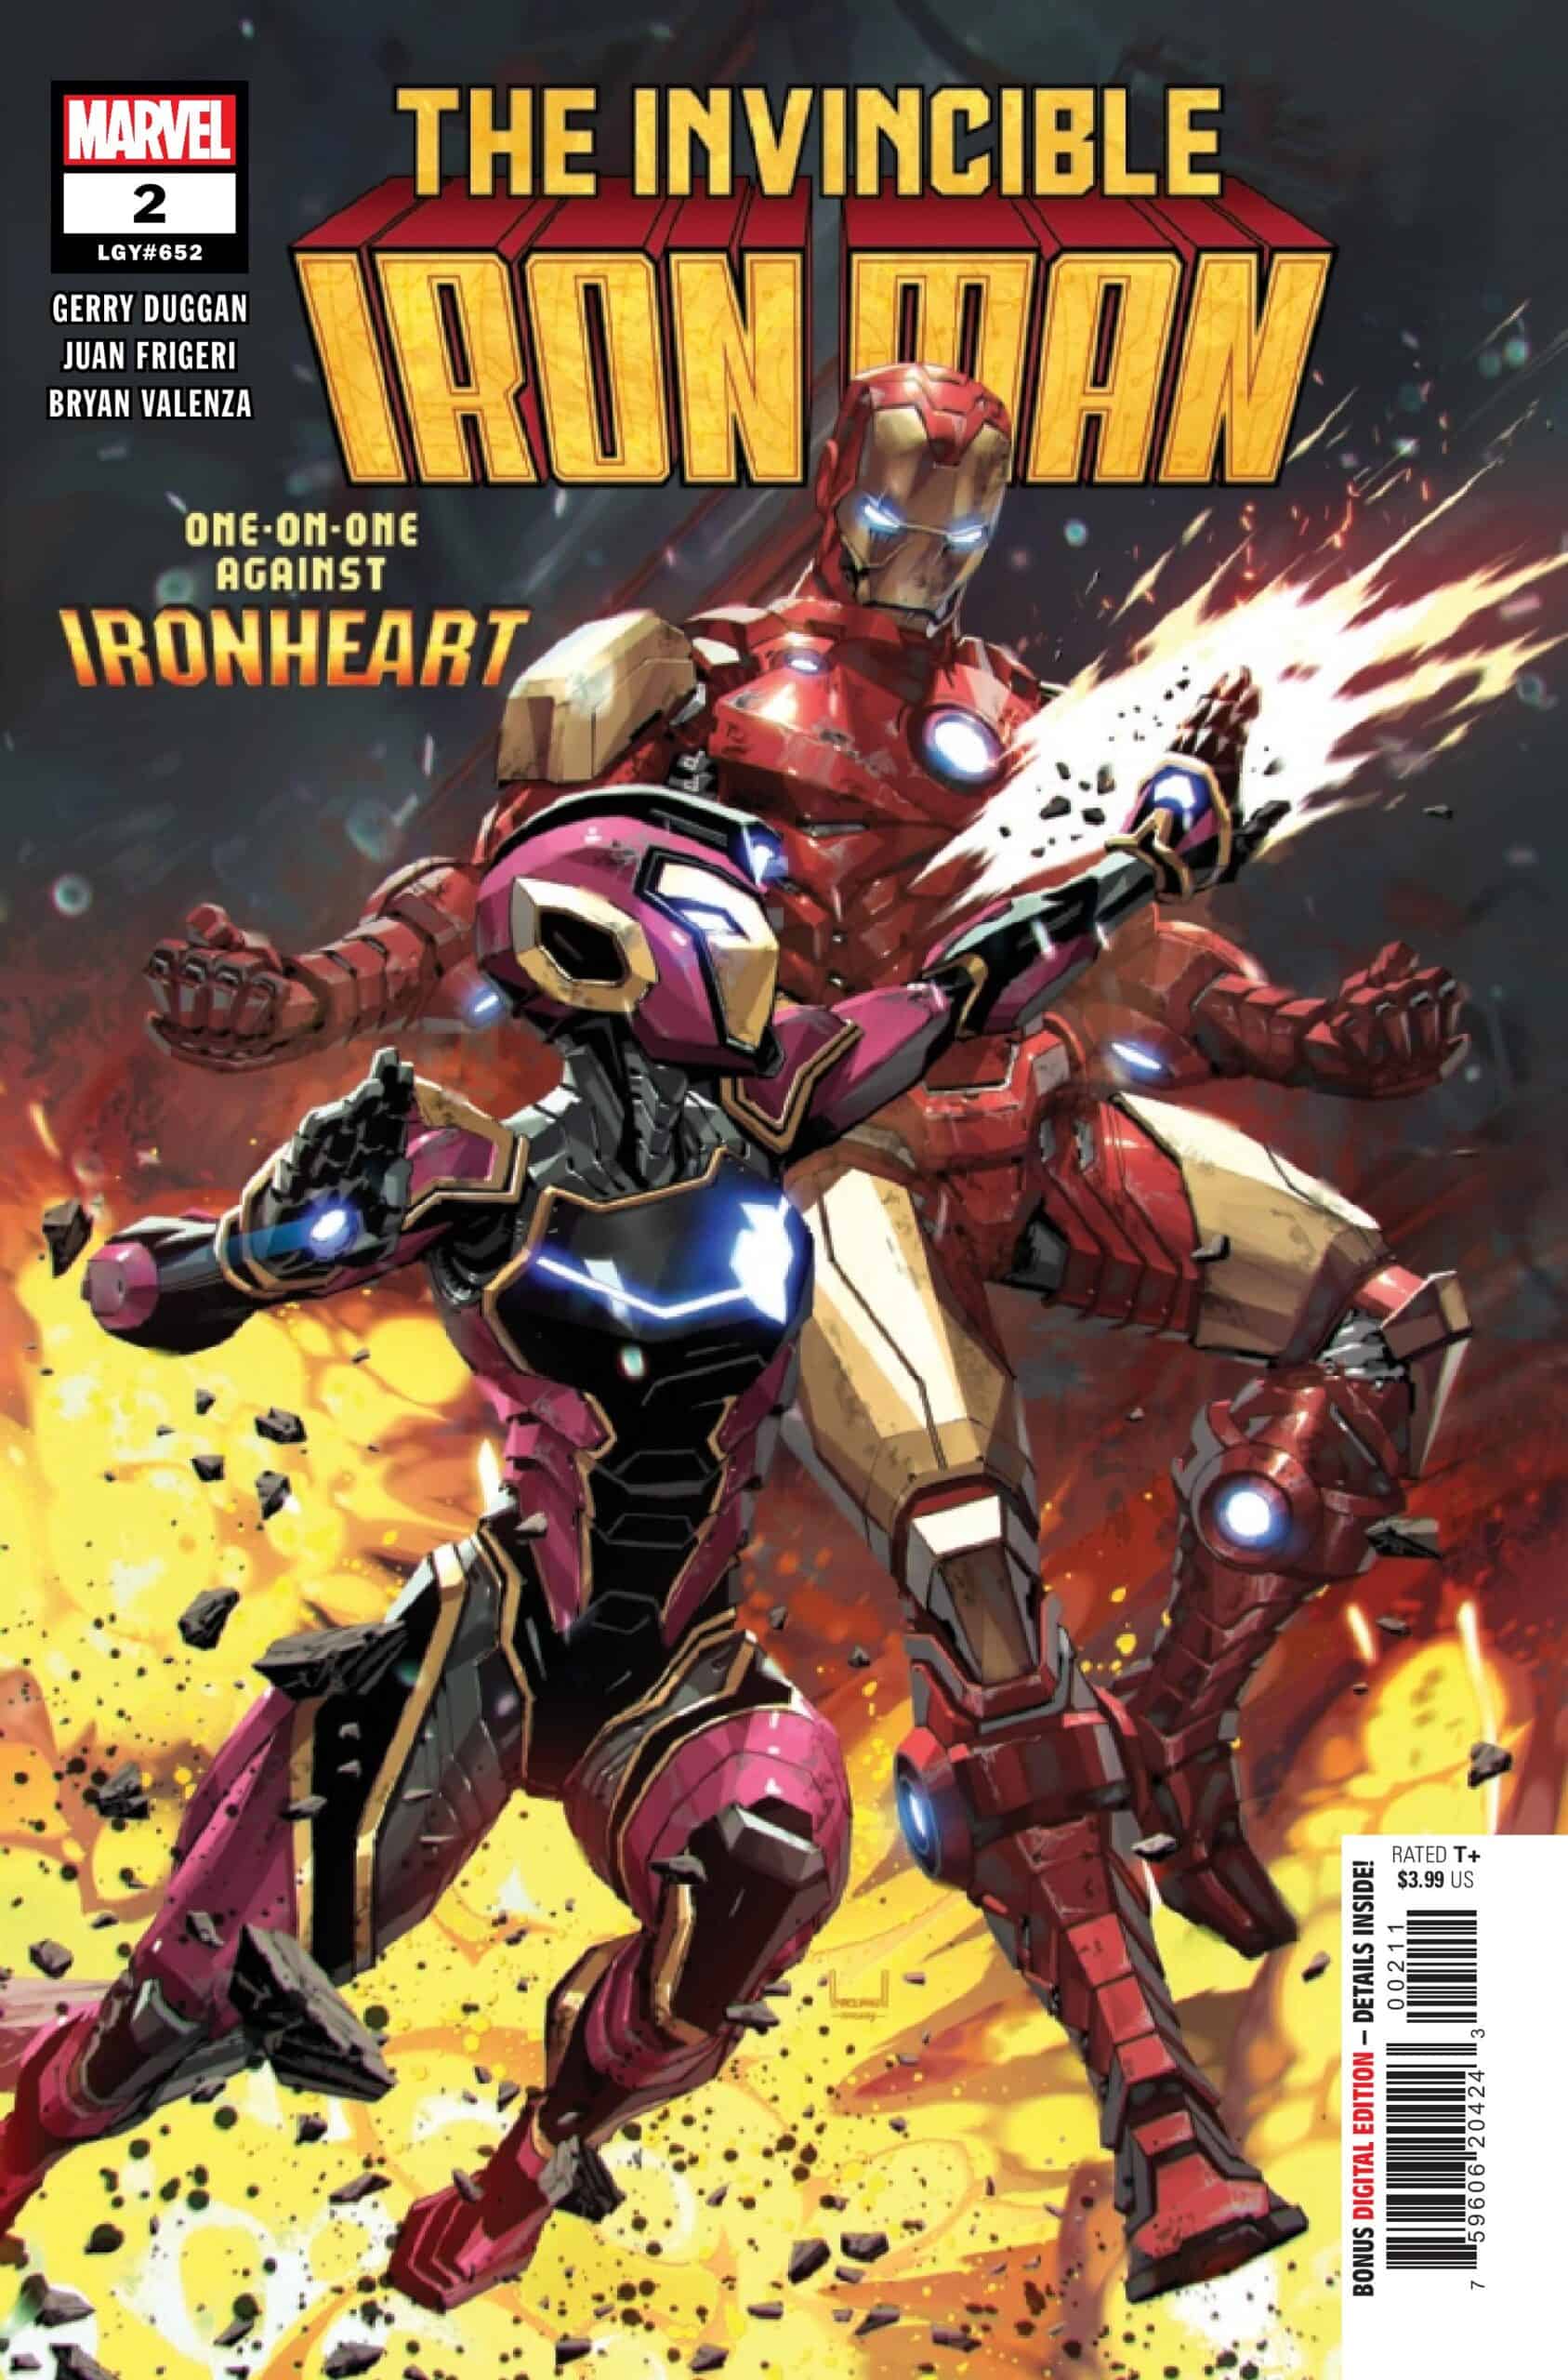 iron man comic page